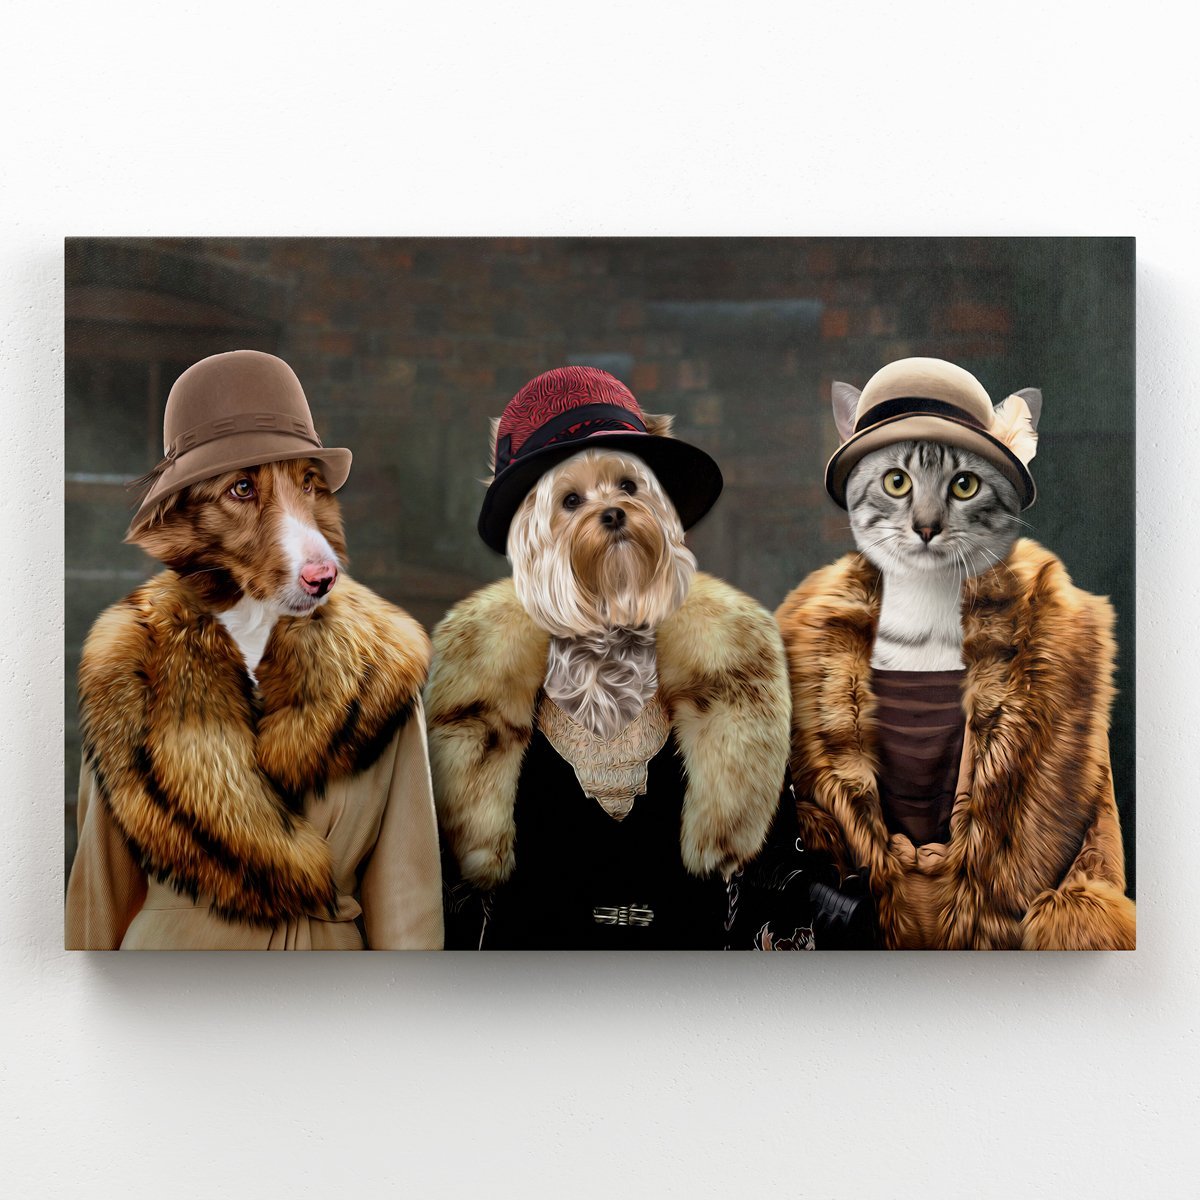 The Women (Peaky Blinders Inspired) 3 Pet: Custom Pet Canvas - Paw & Glory - #pet portraits# - #dog portraits# - #pet portraits uk#paw and glory, pet portraits canvas,personalised dog canvas, personalised dog canvas uk, canvas dog carrier, pet canvas print, custom pet canvas uk